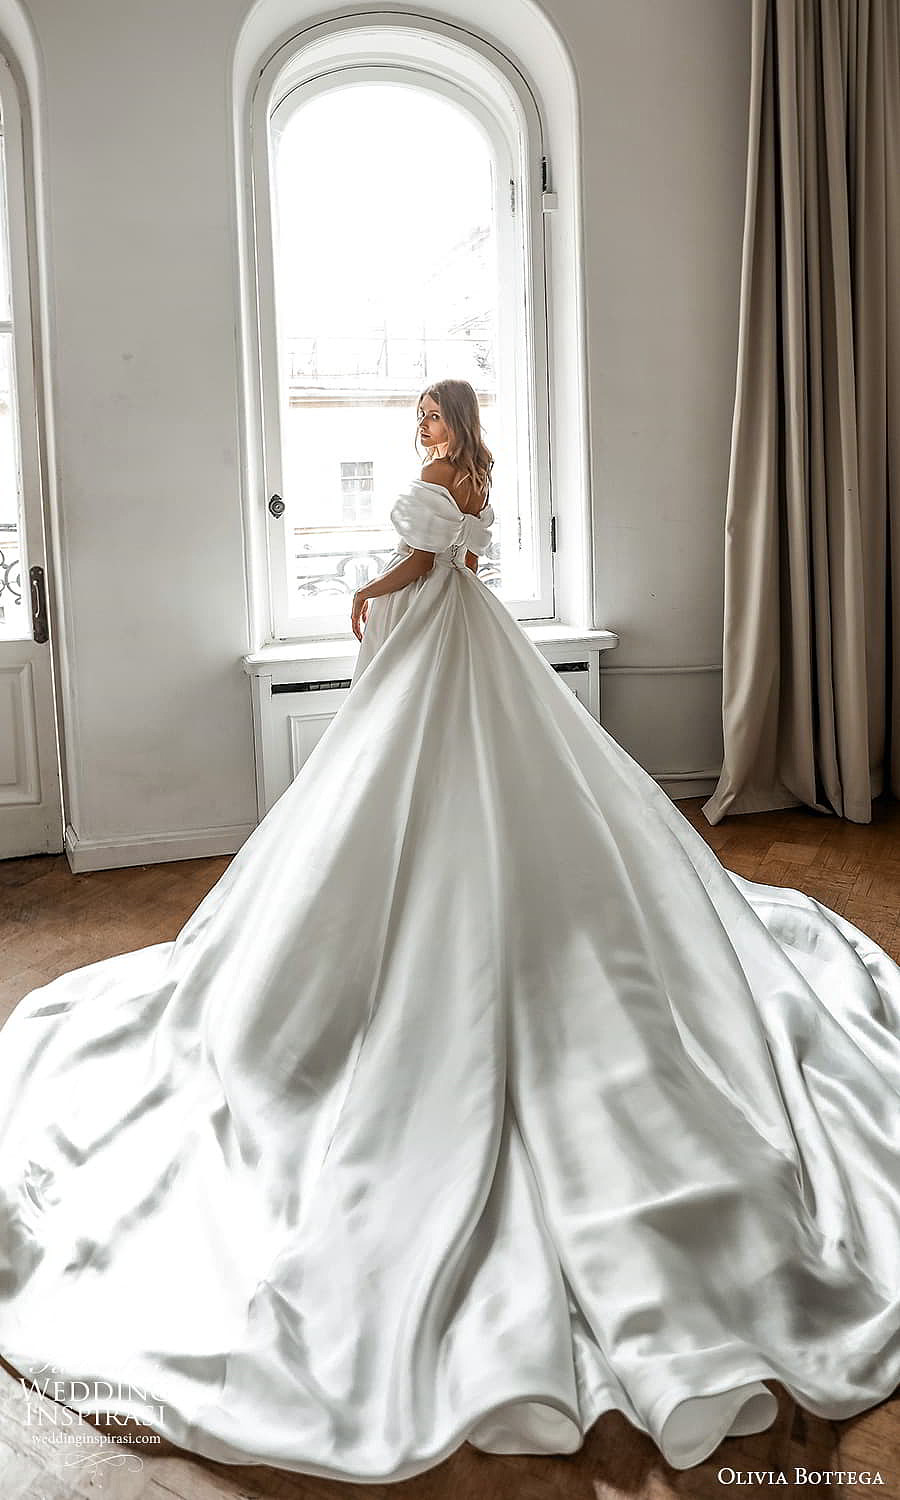 Olivia Bottega Pret-a-Porter 新娘系列 优雅百搭新娘嫁衣 - 31